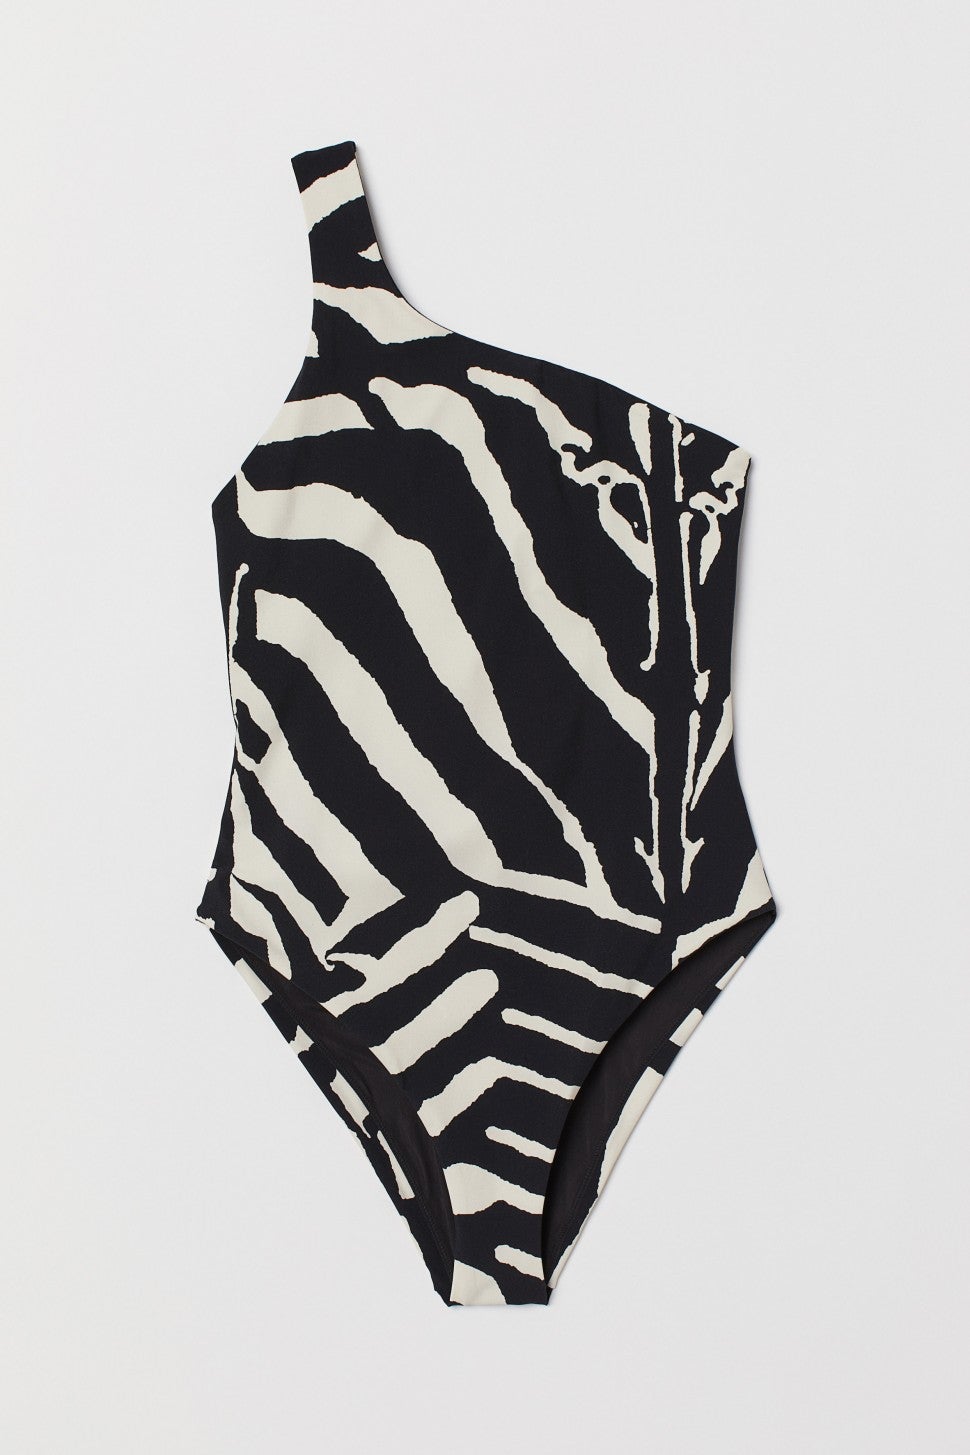 H&M zebra print one-shoulder swimsuit